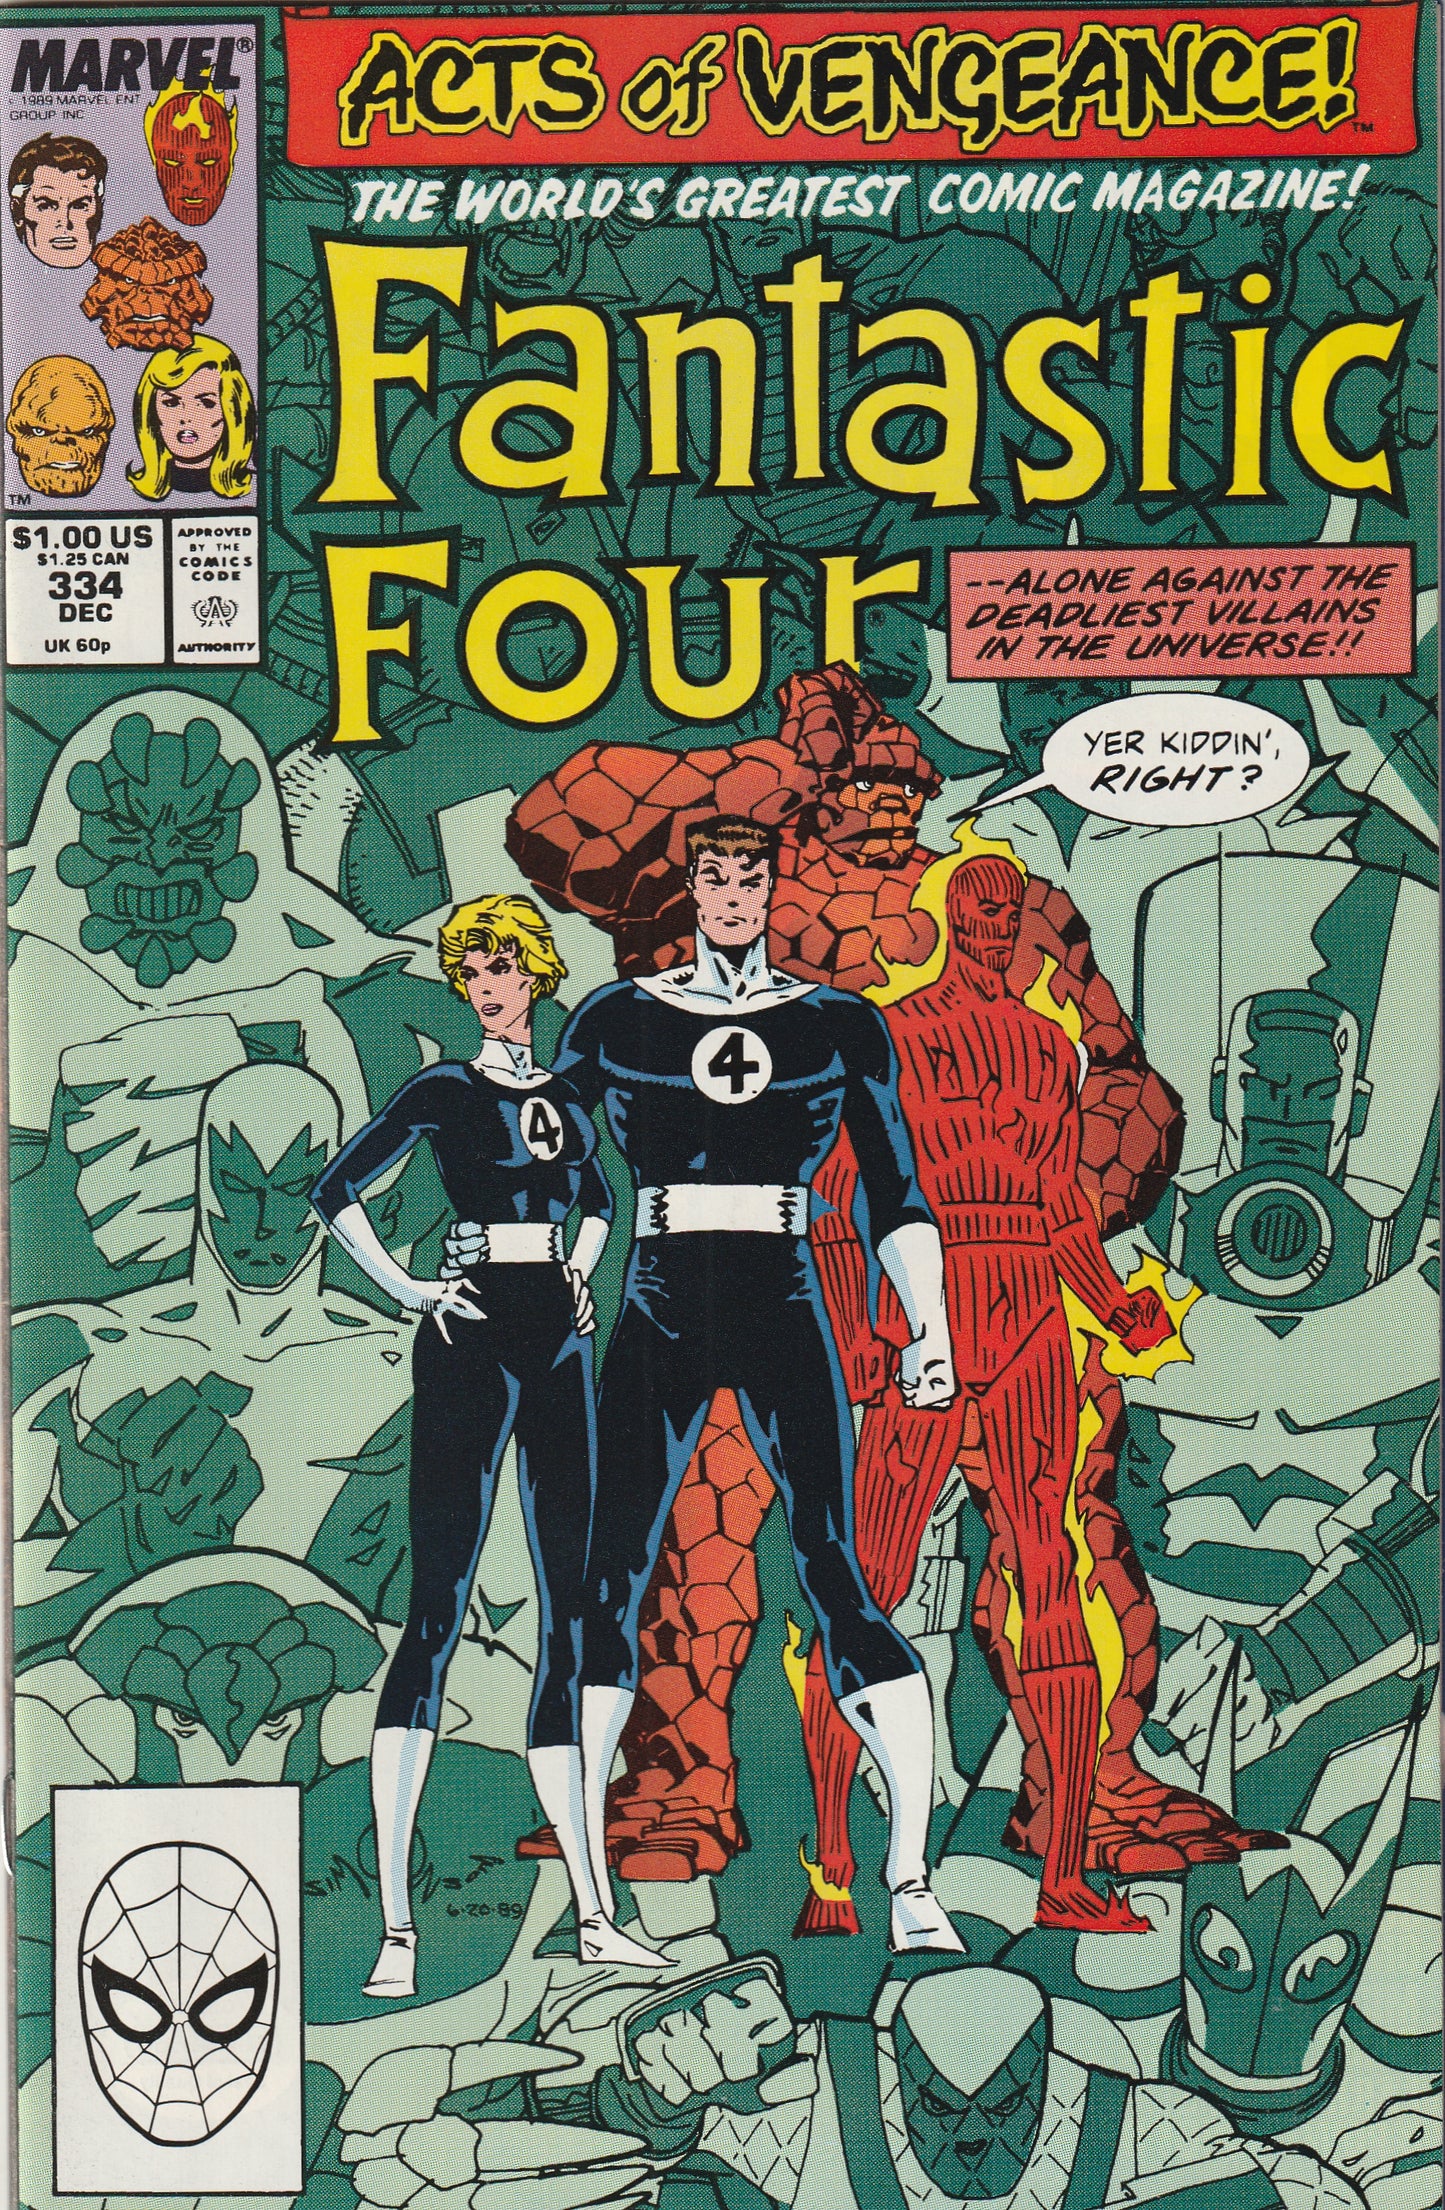 Fantastic Four #334 (1989)